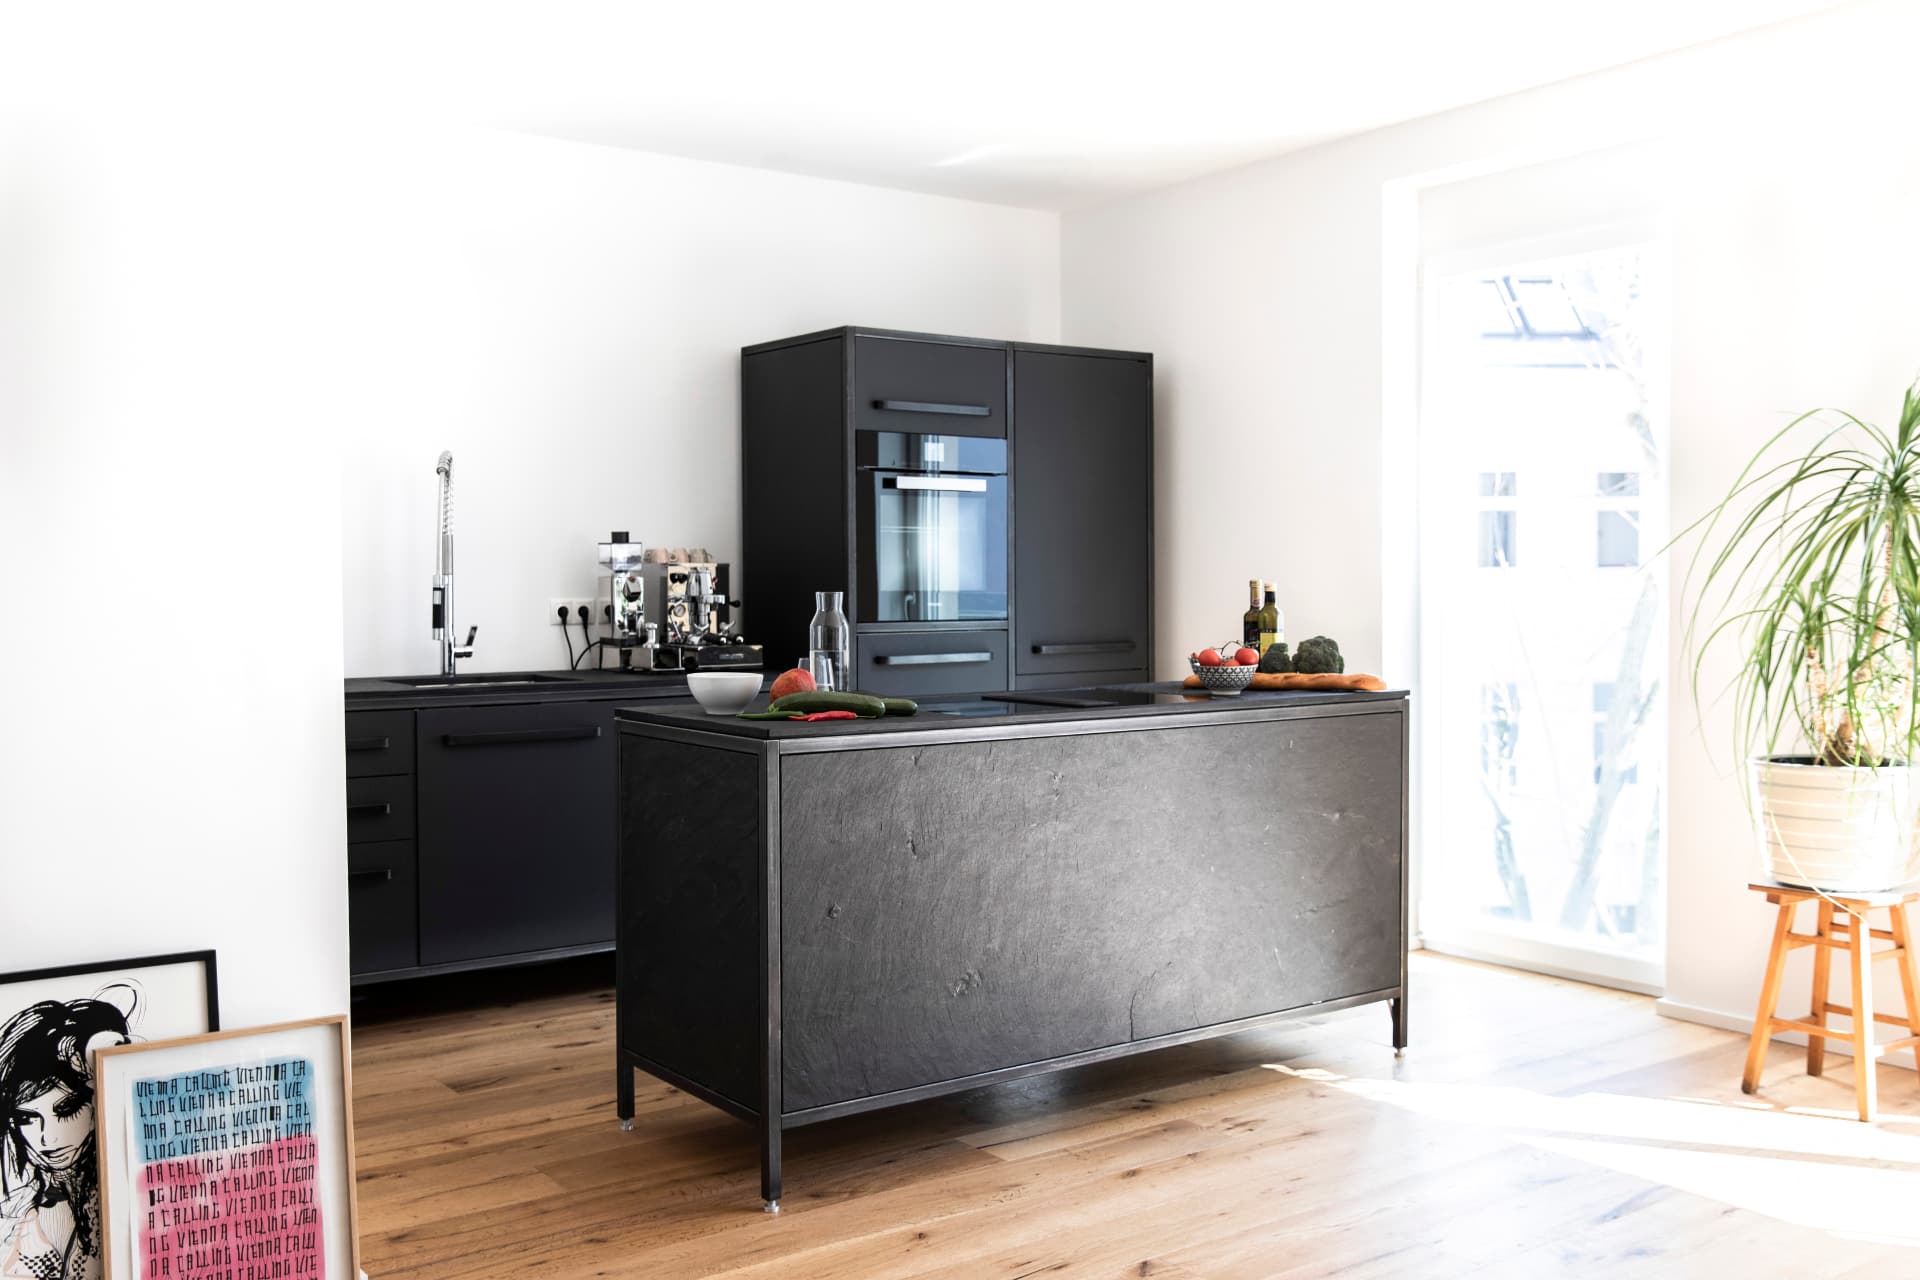 freestanding-kitchen-counter-natural-stone-slate-keep-kitchens